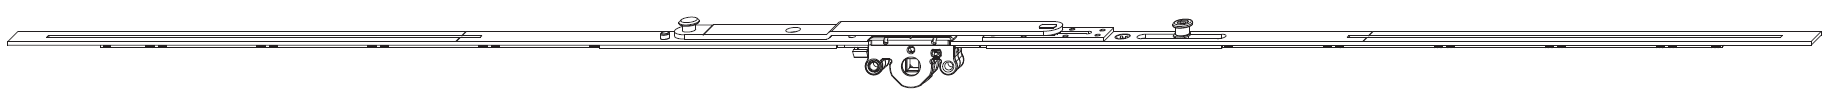 MAICO -  Cremonese MULTI-MATIC per vasistas altezza maniglia variabile con forbice per ribalta premontata - gr / dim. 1250 - entrata 15 - alt. man. VARIABILE - lbb/hbb 751 - 1250